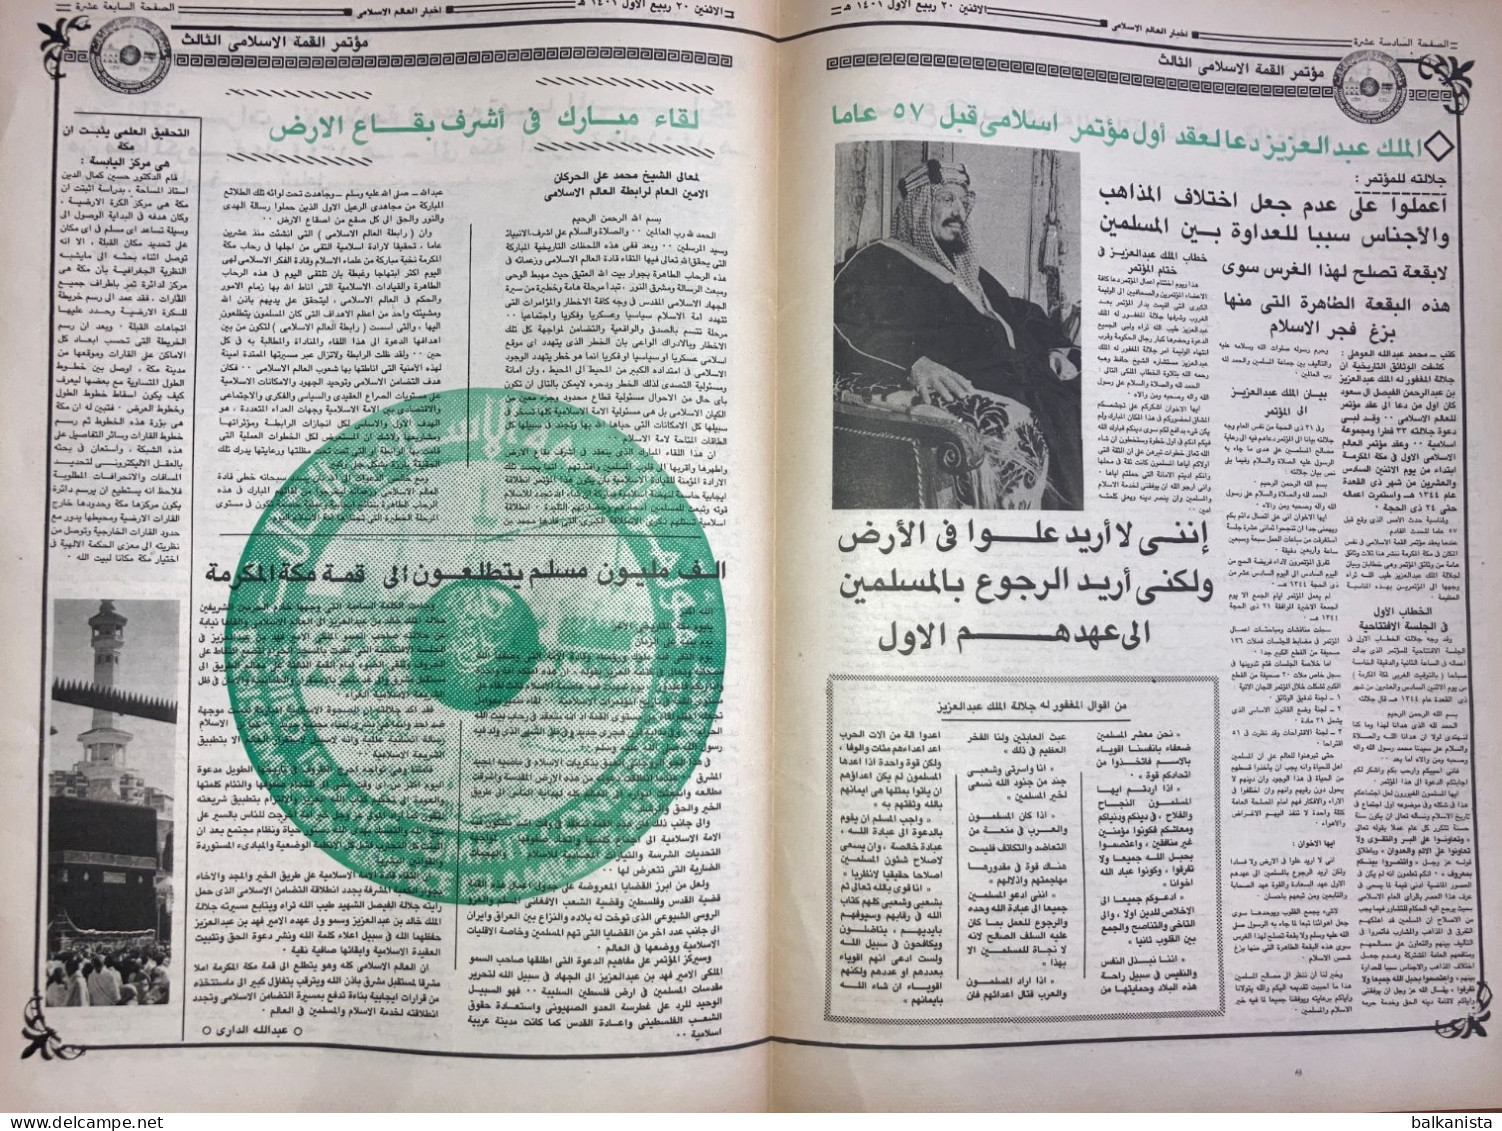 Saudi Arabia  Akhbar al-Alam al-Islami Newspaper  26 January 1981